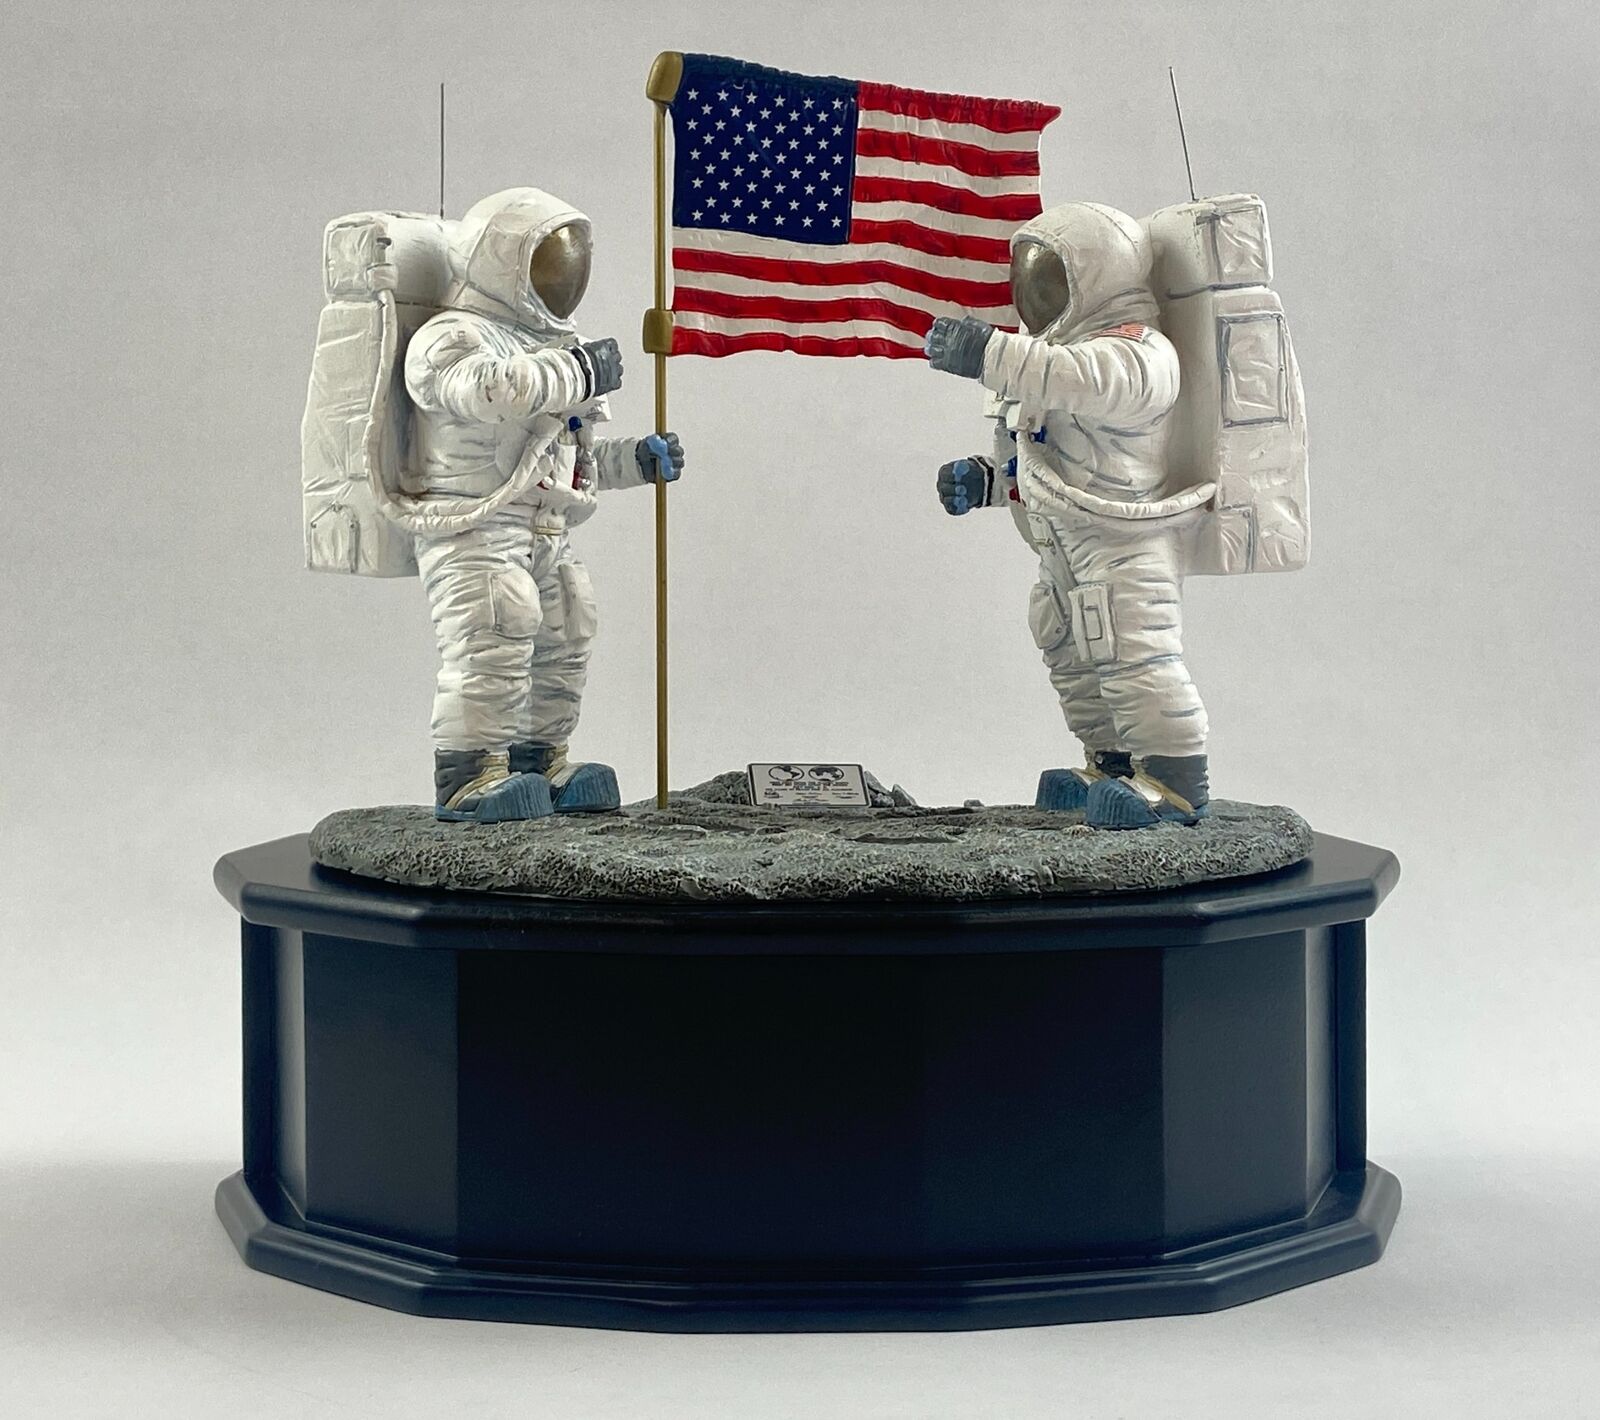 Apollo 11 Moon Landing 50th Anniversary Coin Collection Figurine